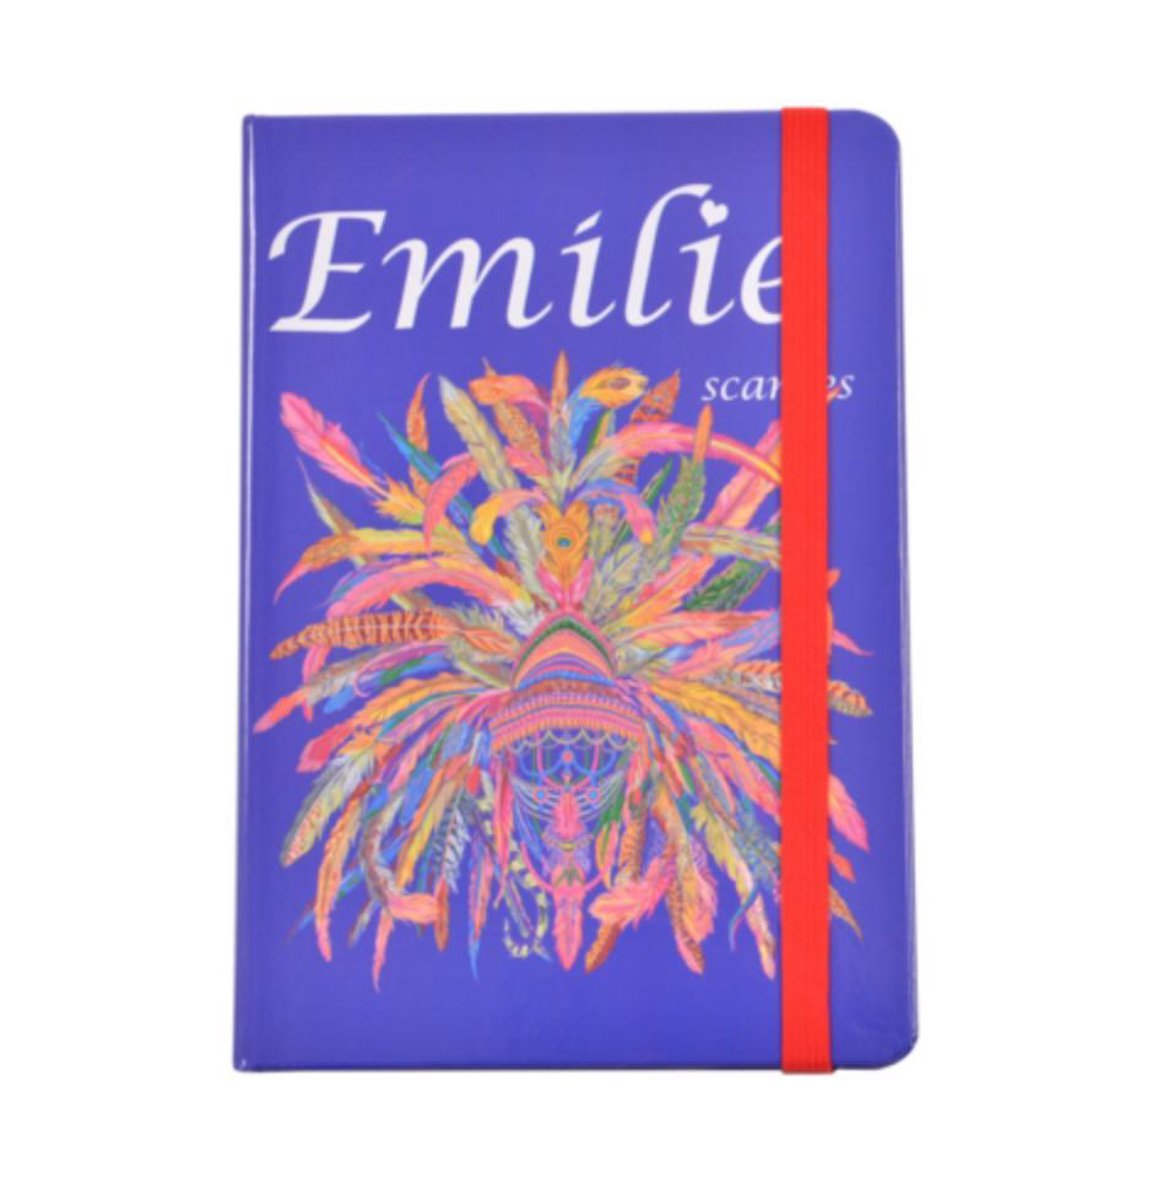 Emilie Scarves Notitieboek (A5) Kobalt blauw - Verenprint - Elastiek